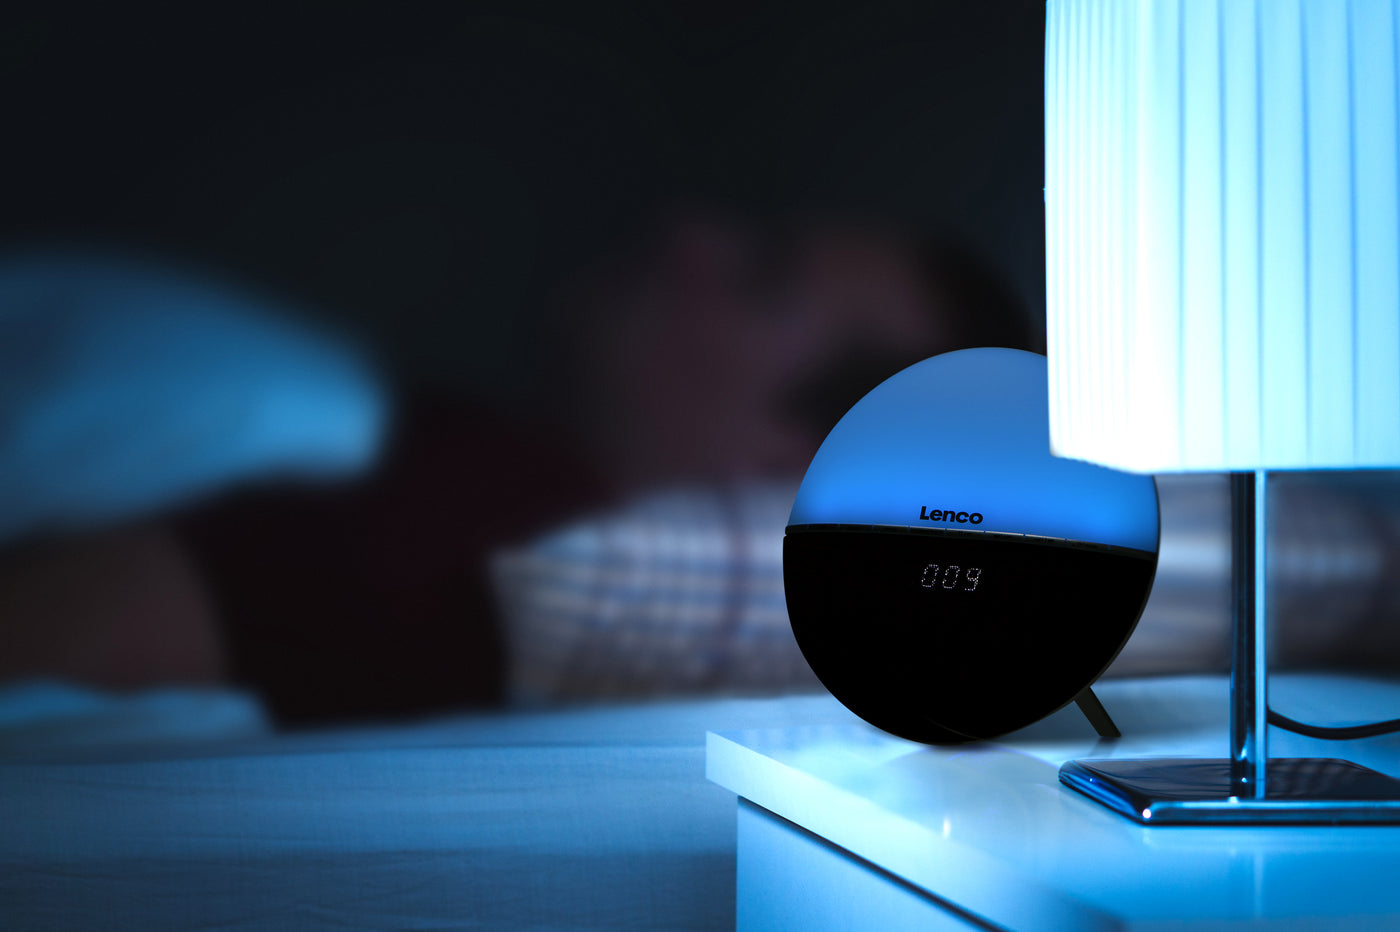 LENCO CRW-4BY - FM Alarm Clock Radio - Wake up light with Bluetooth® - Red